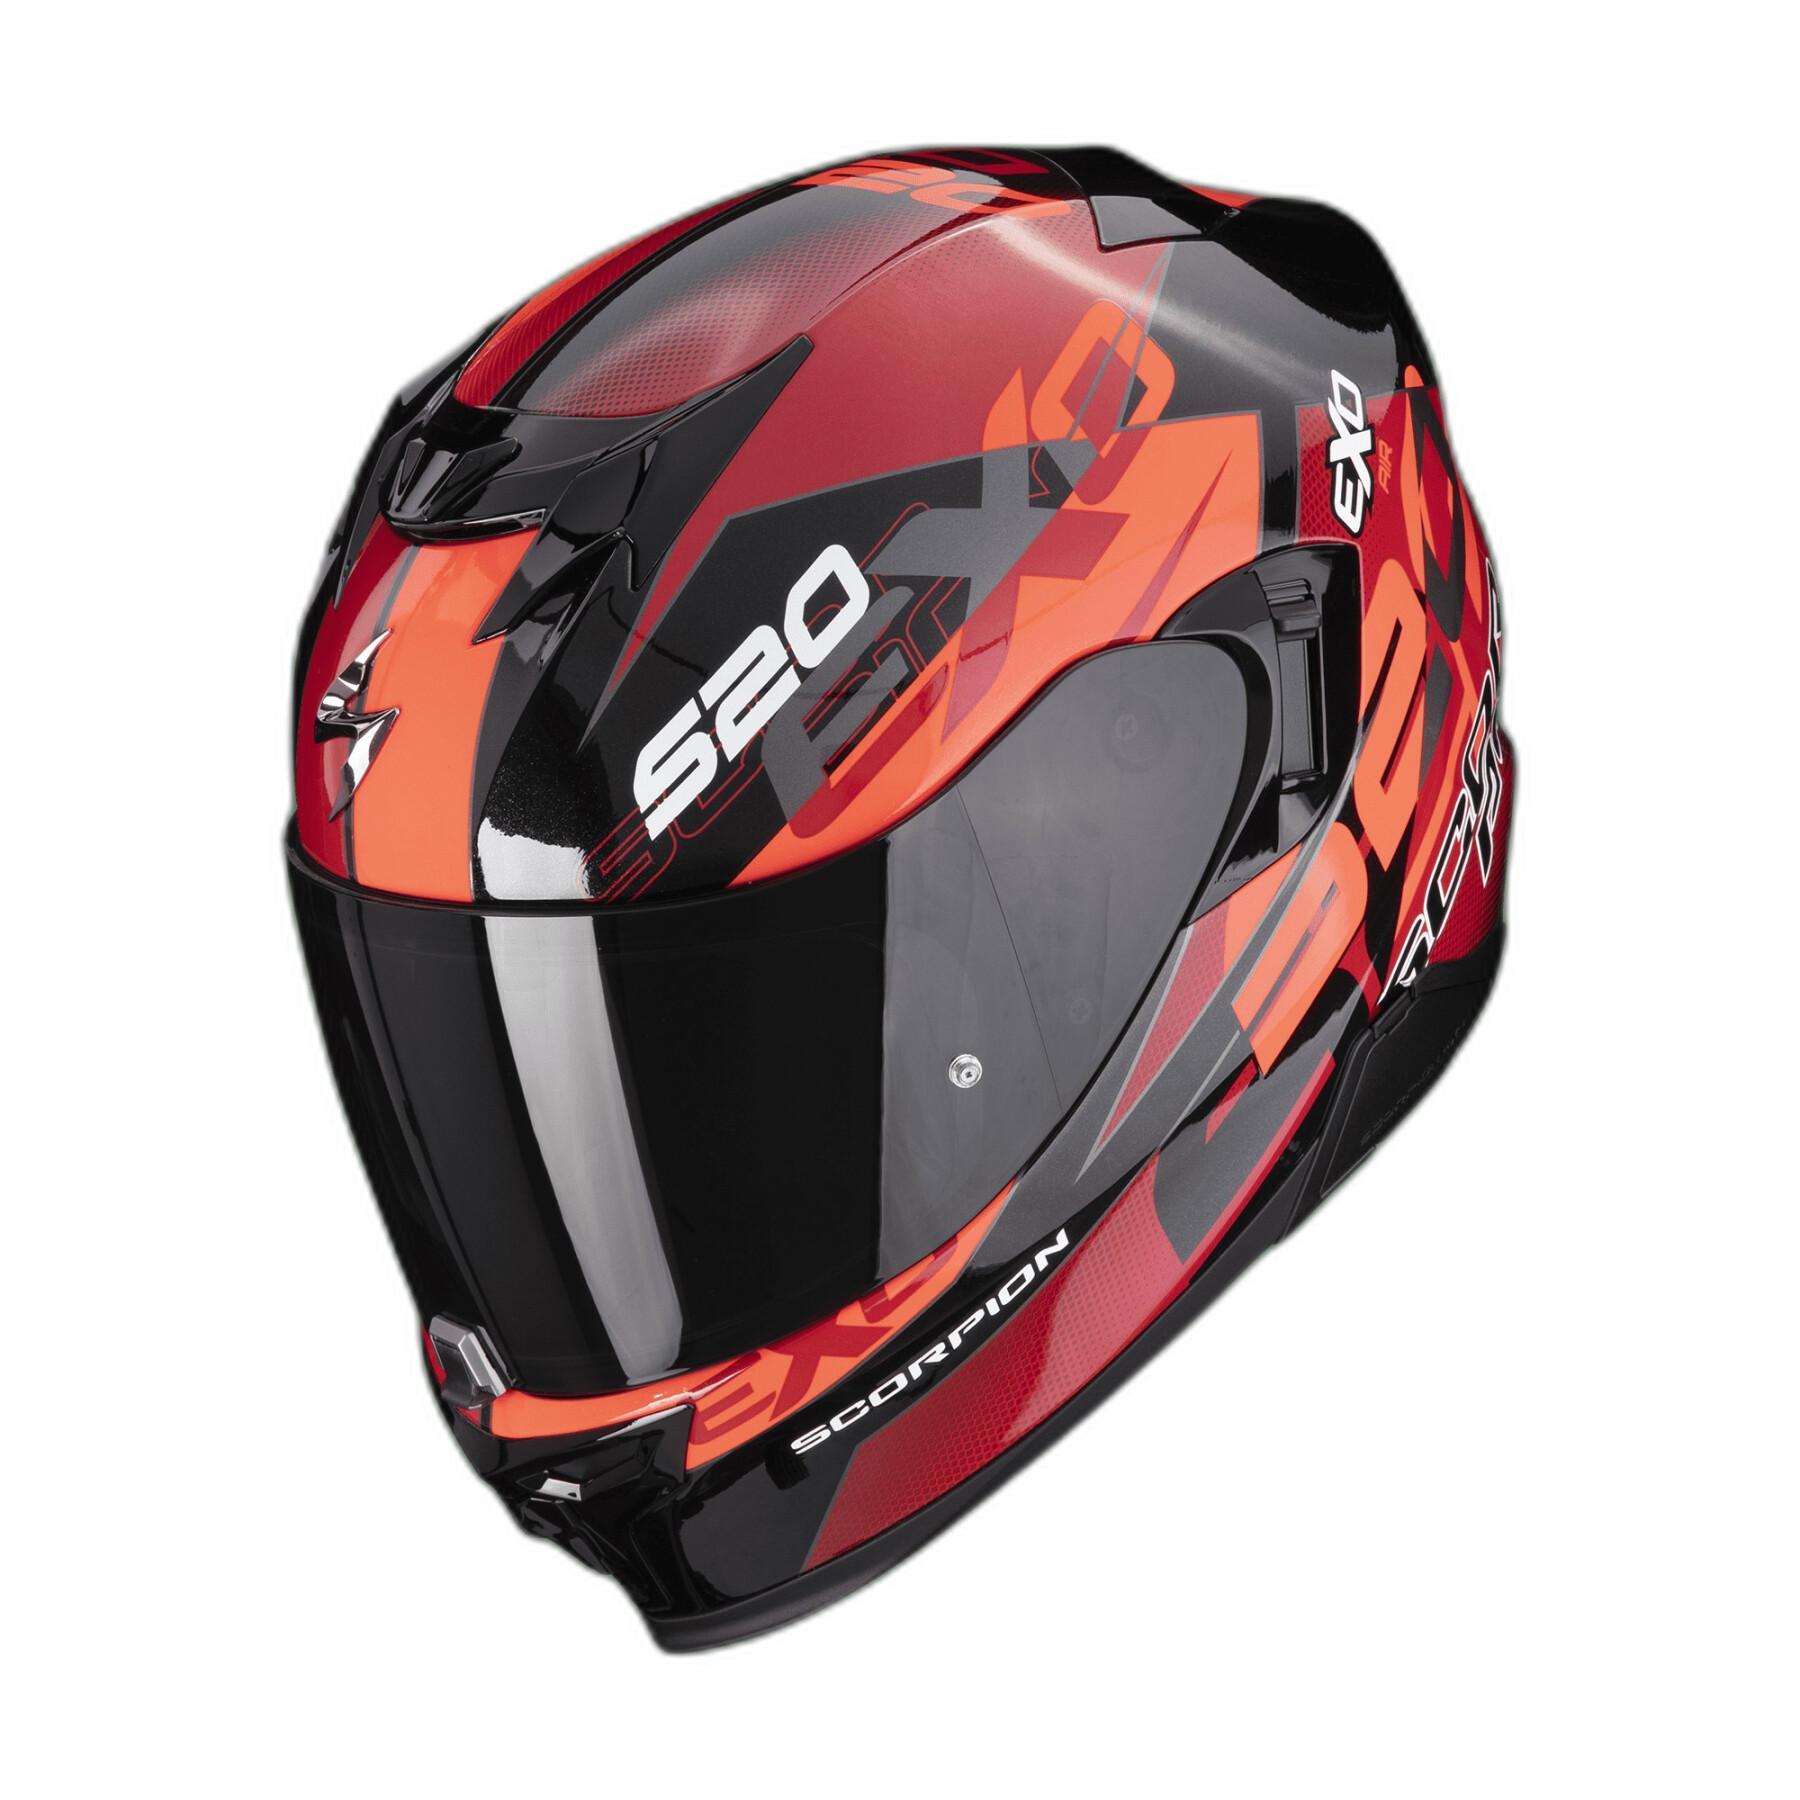 Full face motorcycle helmet Scorpion Exo-520 Evo Air Cover ECE 22-06